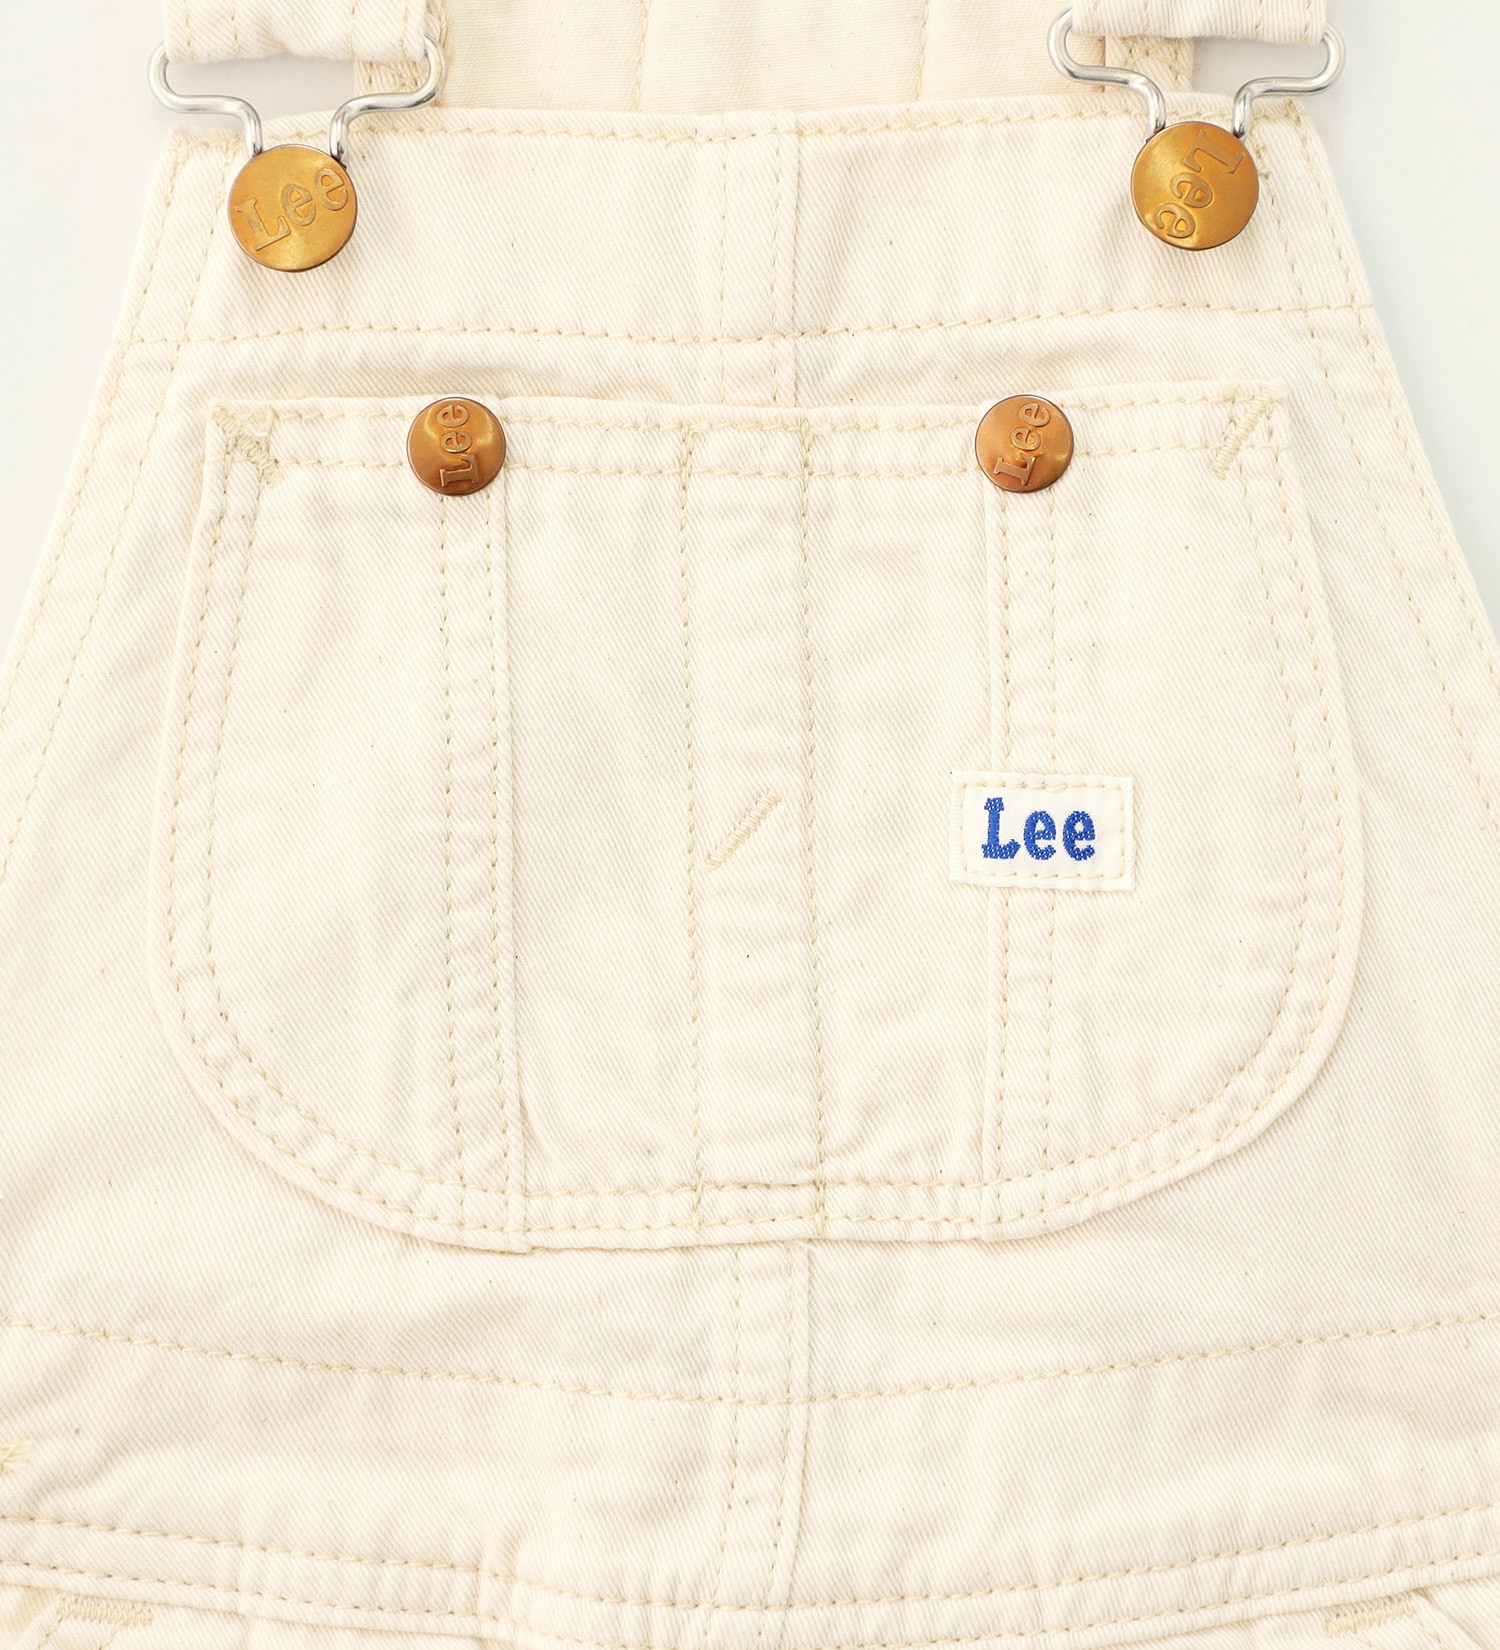 Lee(リー)の【110/120cm】キッズ ジャンパースカート|オールインワン/ジャンパースカート/キッズ|アイボリー